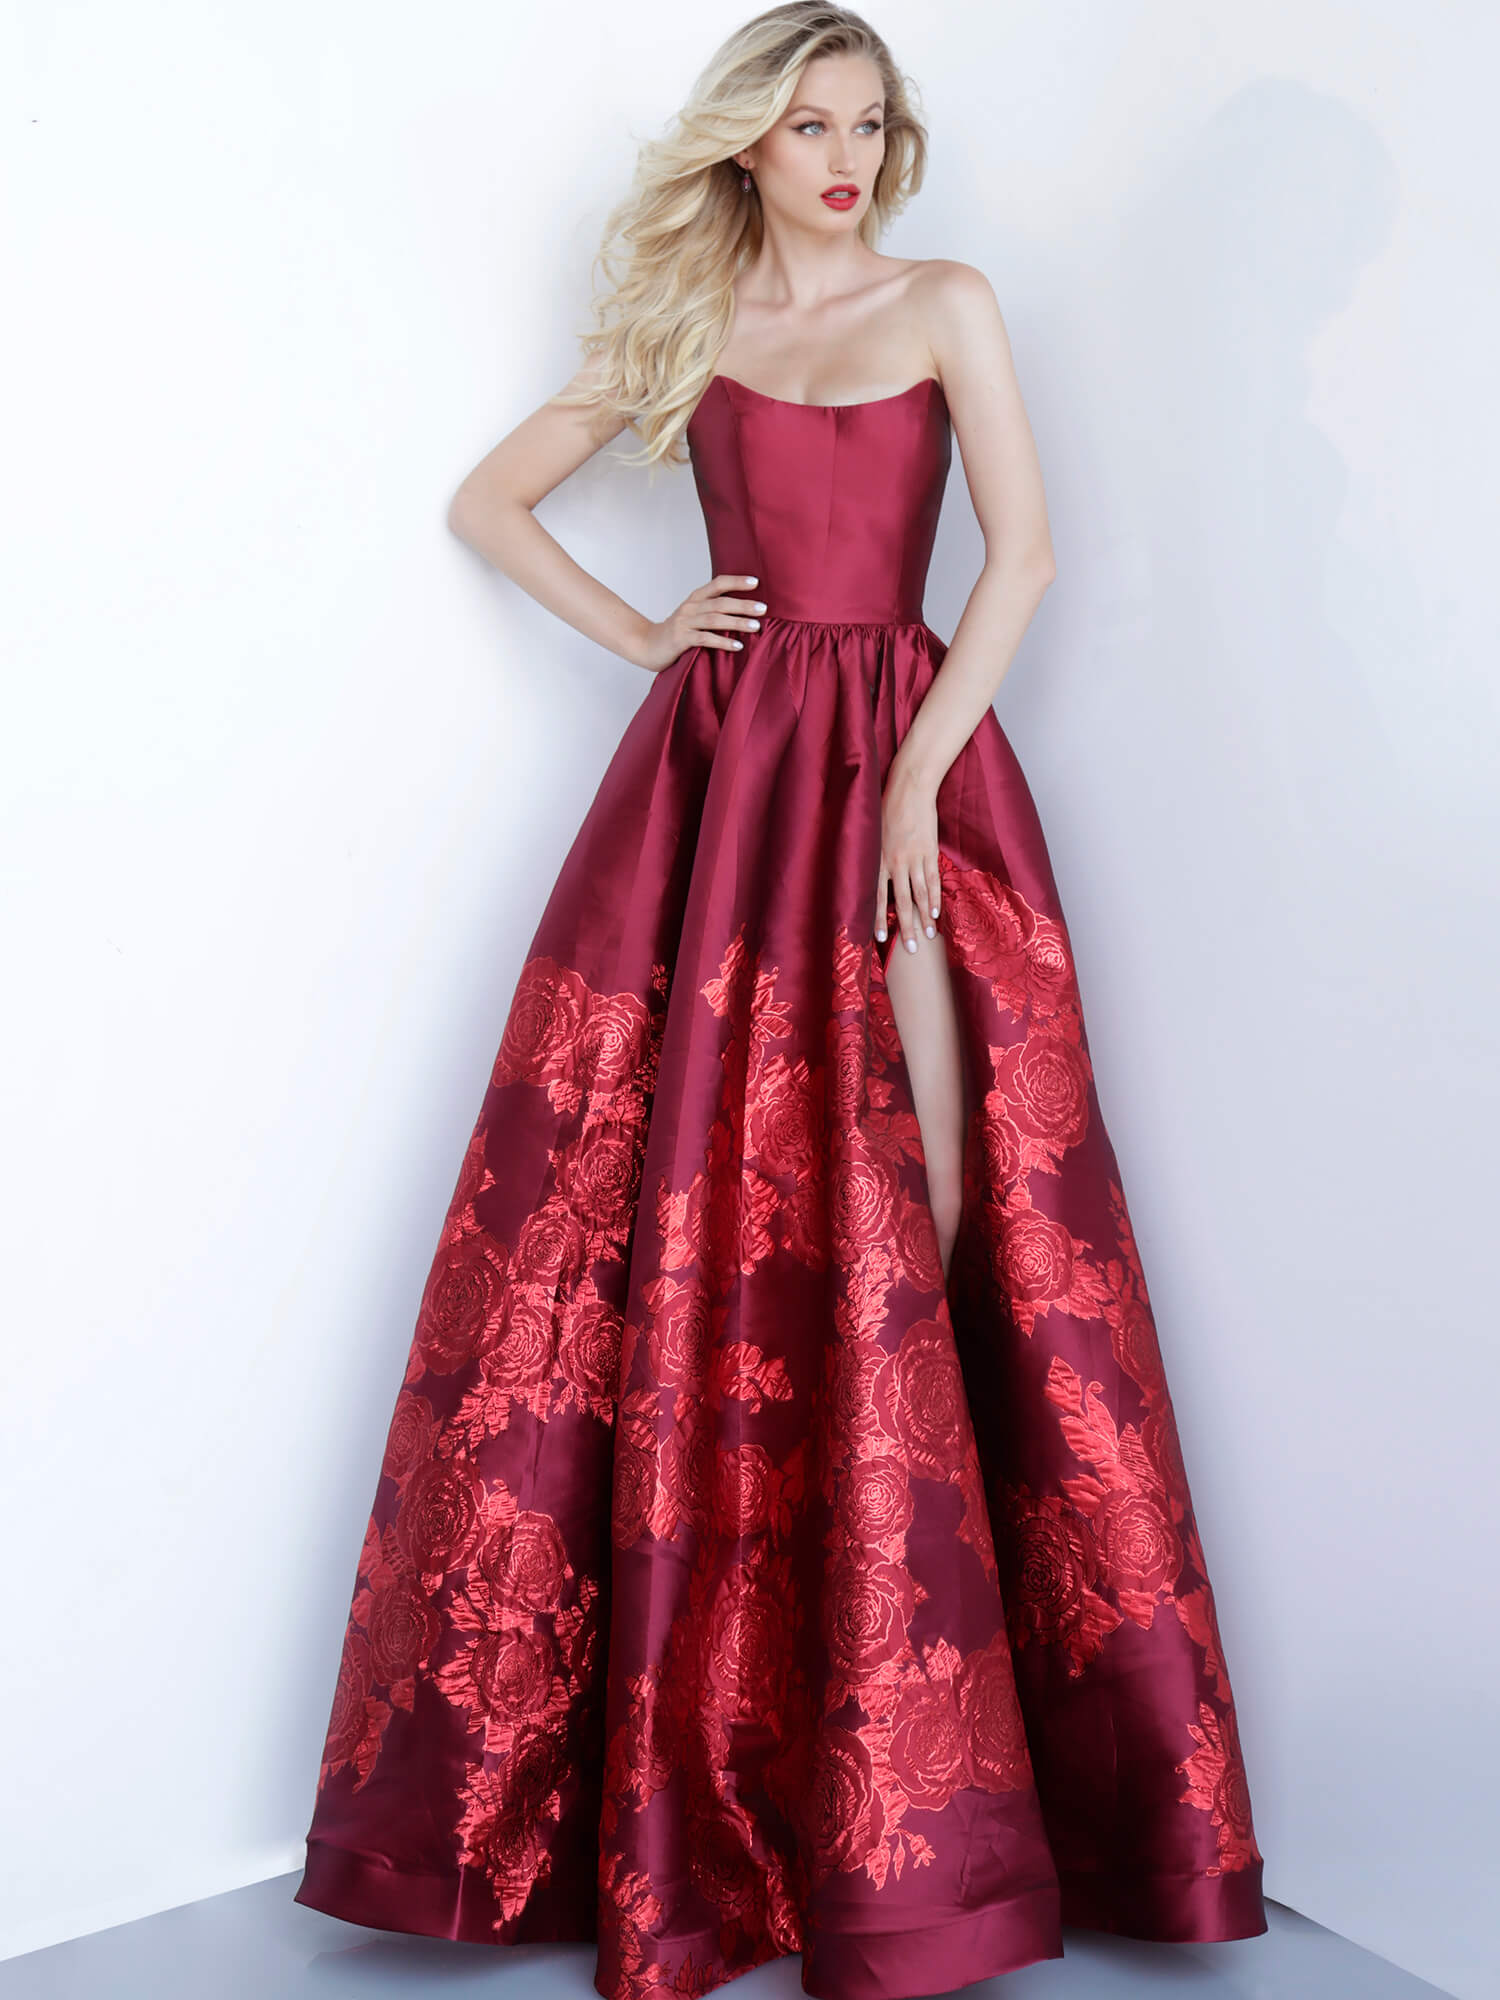 Sherri Hill Floral Print Ruffle Dress 55541 – Terry Costa